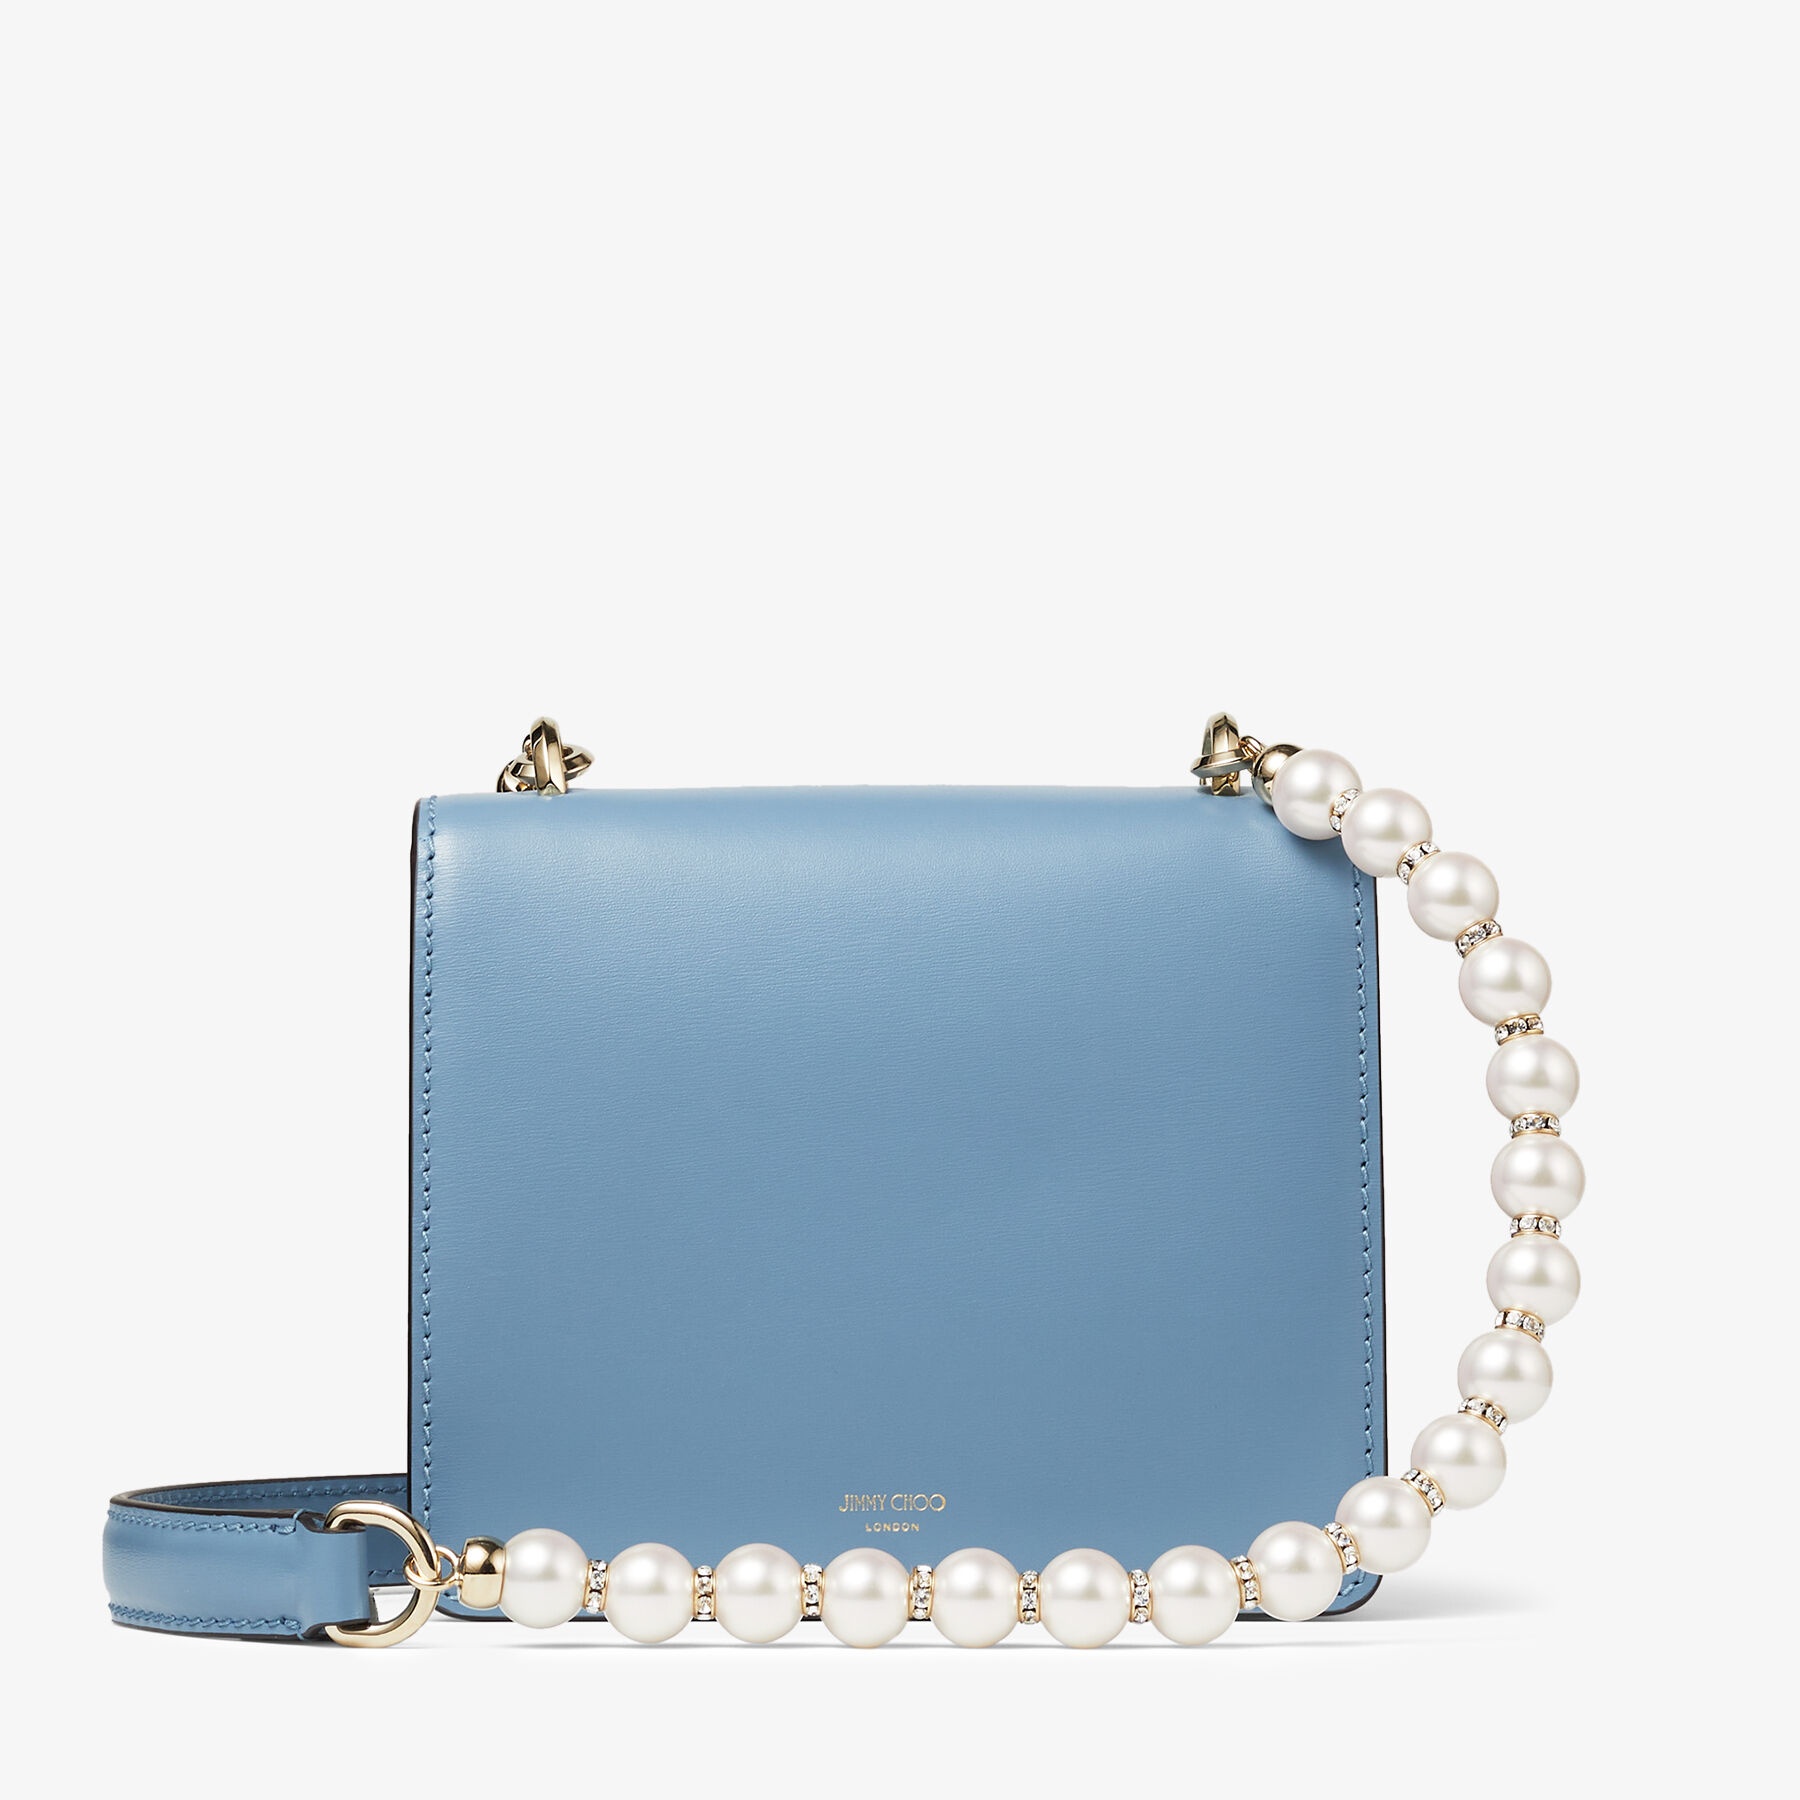 Varenne Quad XS
Smoky Blue Box Leather Shoulder Bag with Pearl Strap - 8